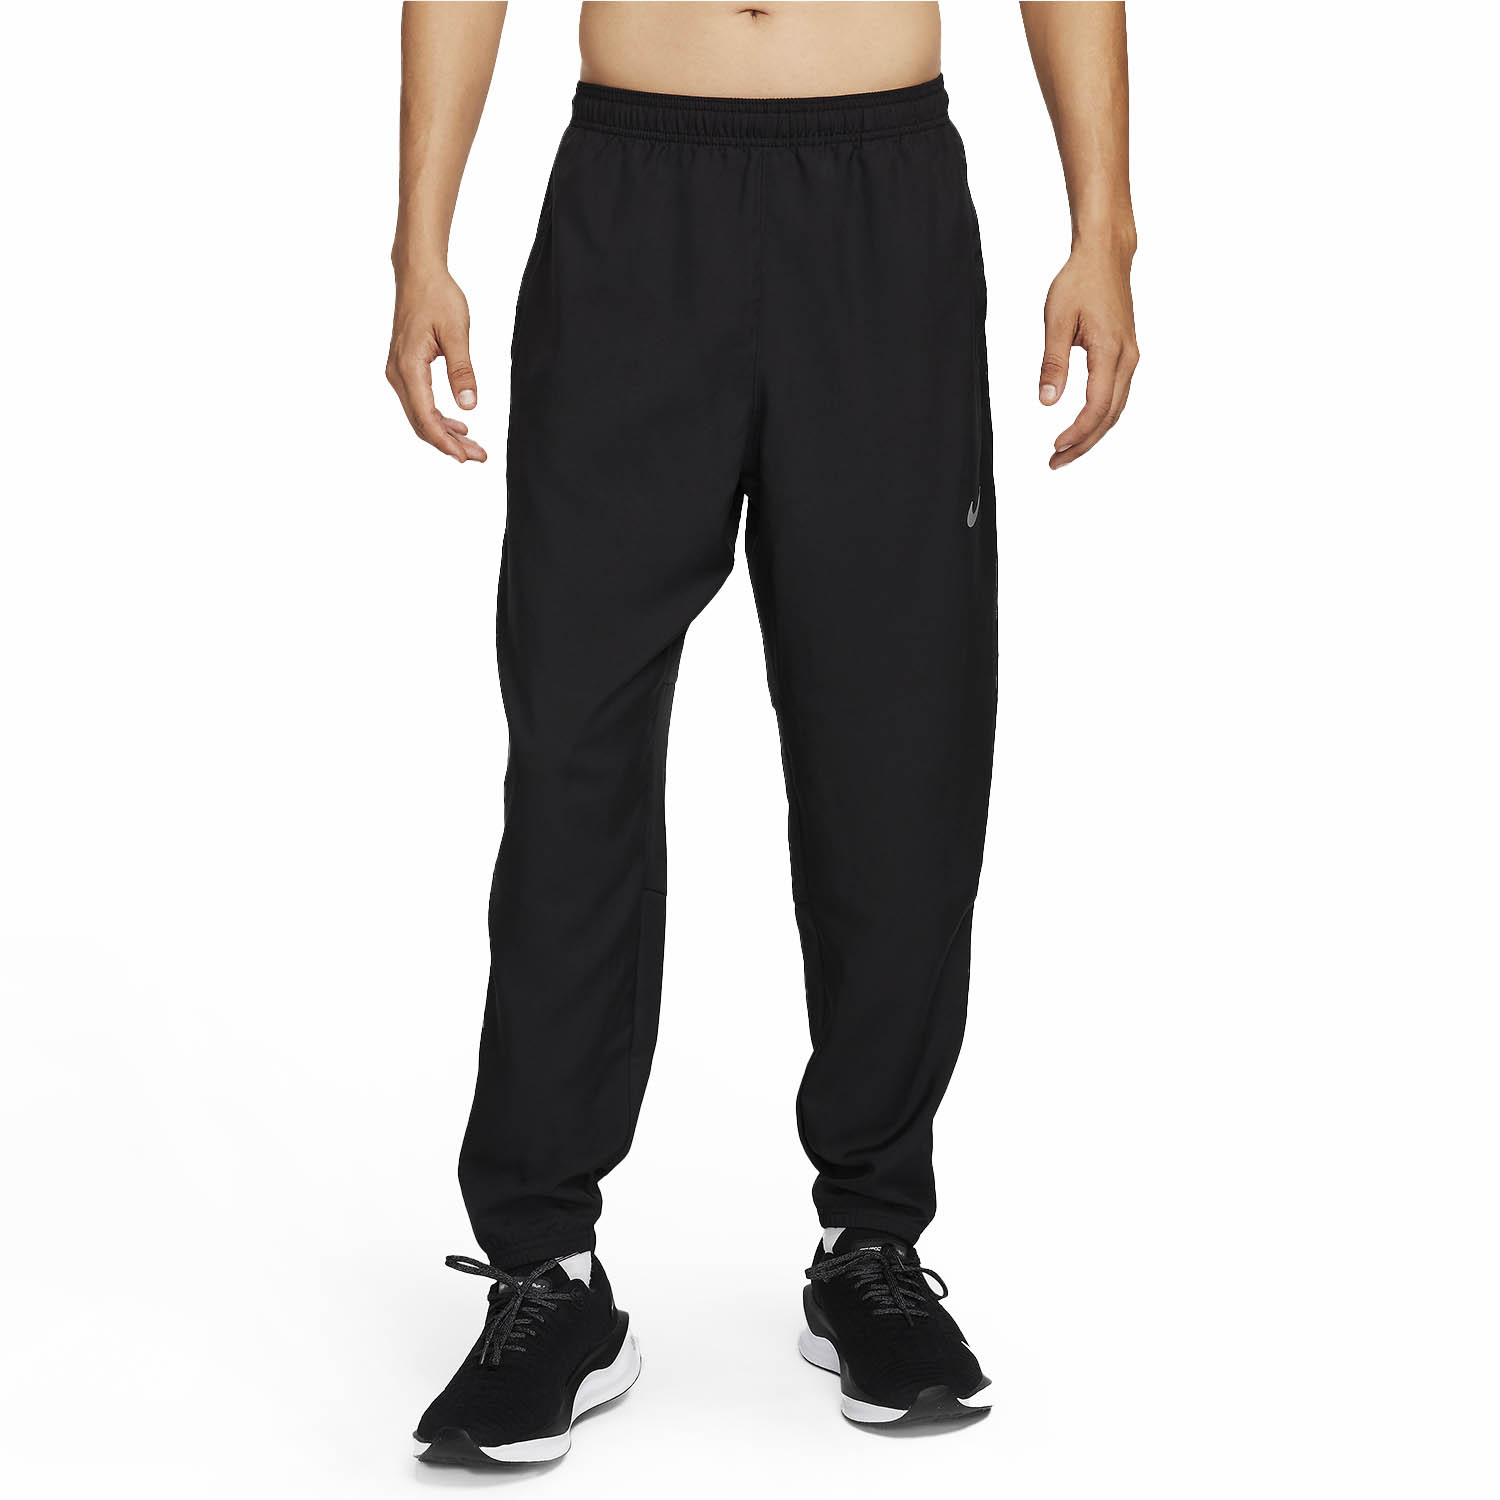 Nike Challenger Men's Running Pants - Black/Reflective Silver